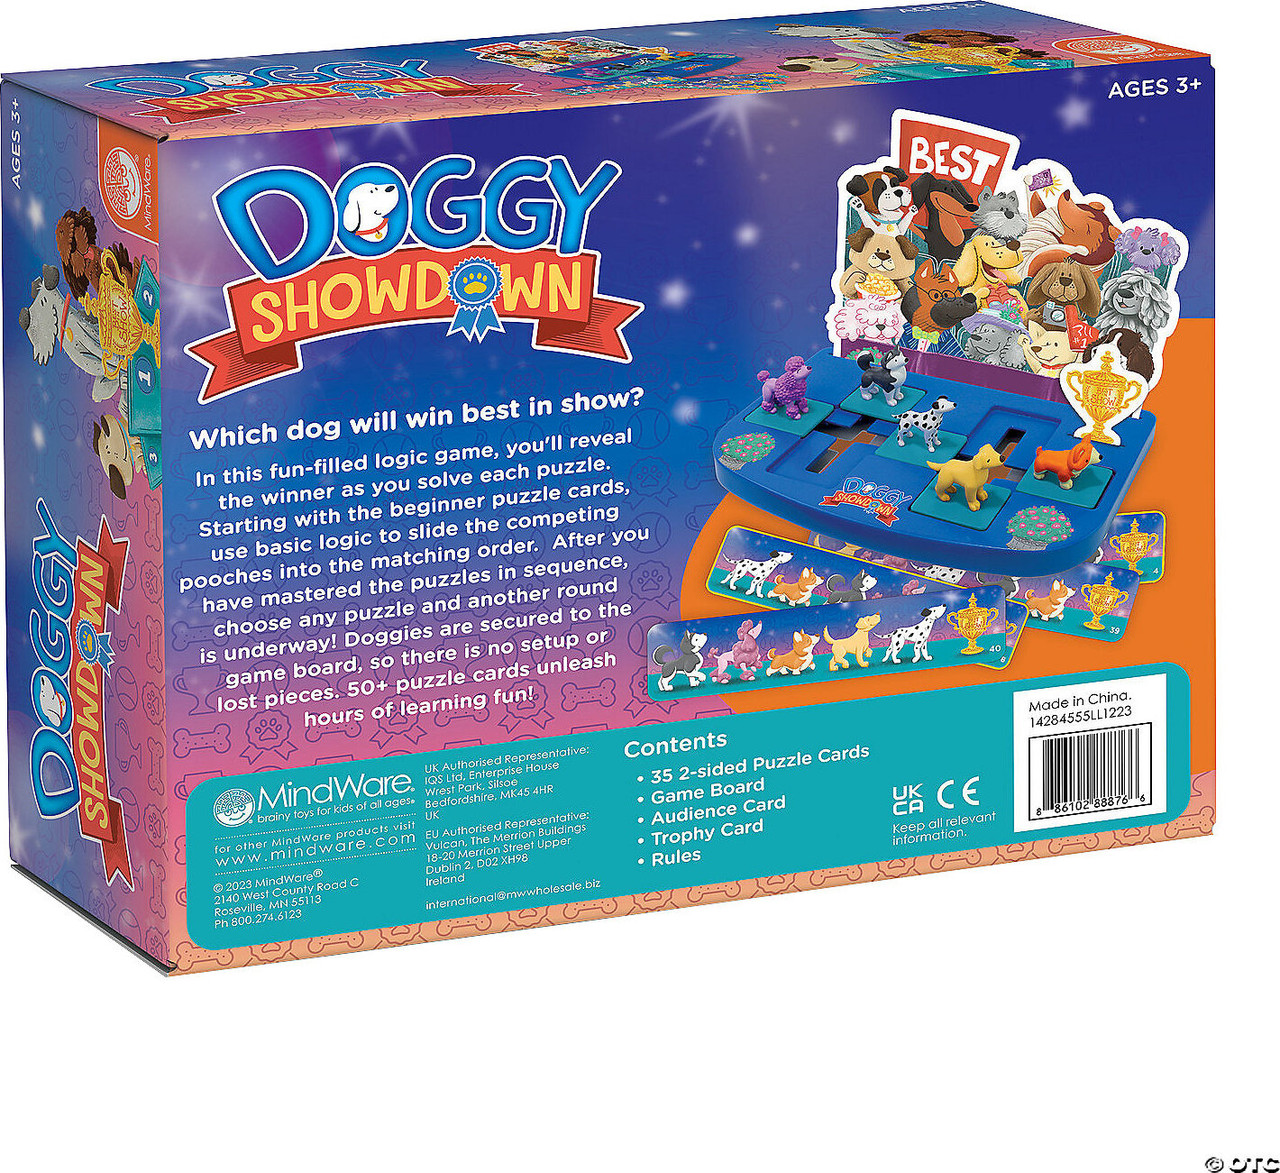 Doggy Showdown Logic Puzzle Game 2